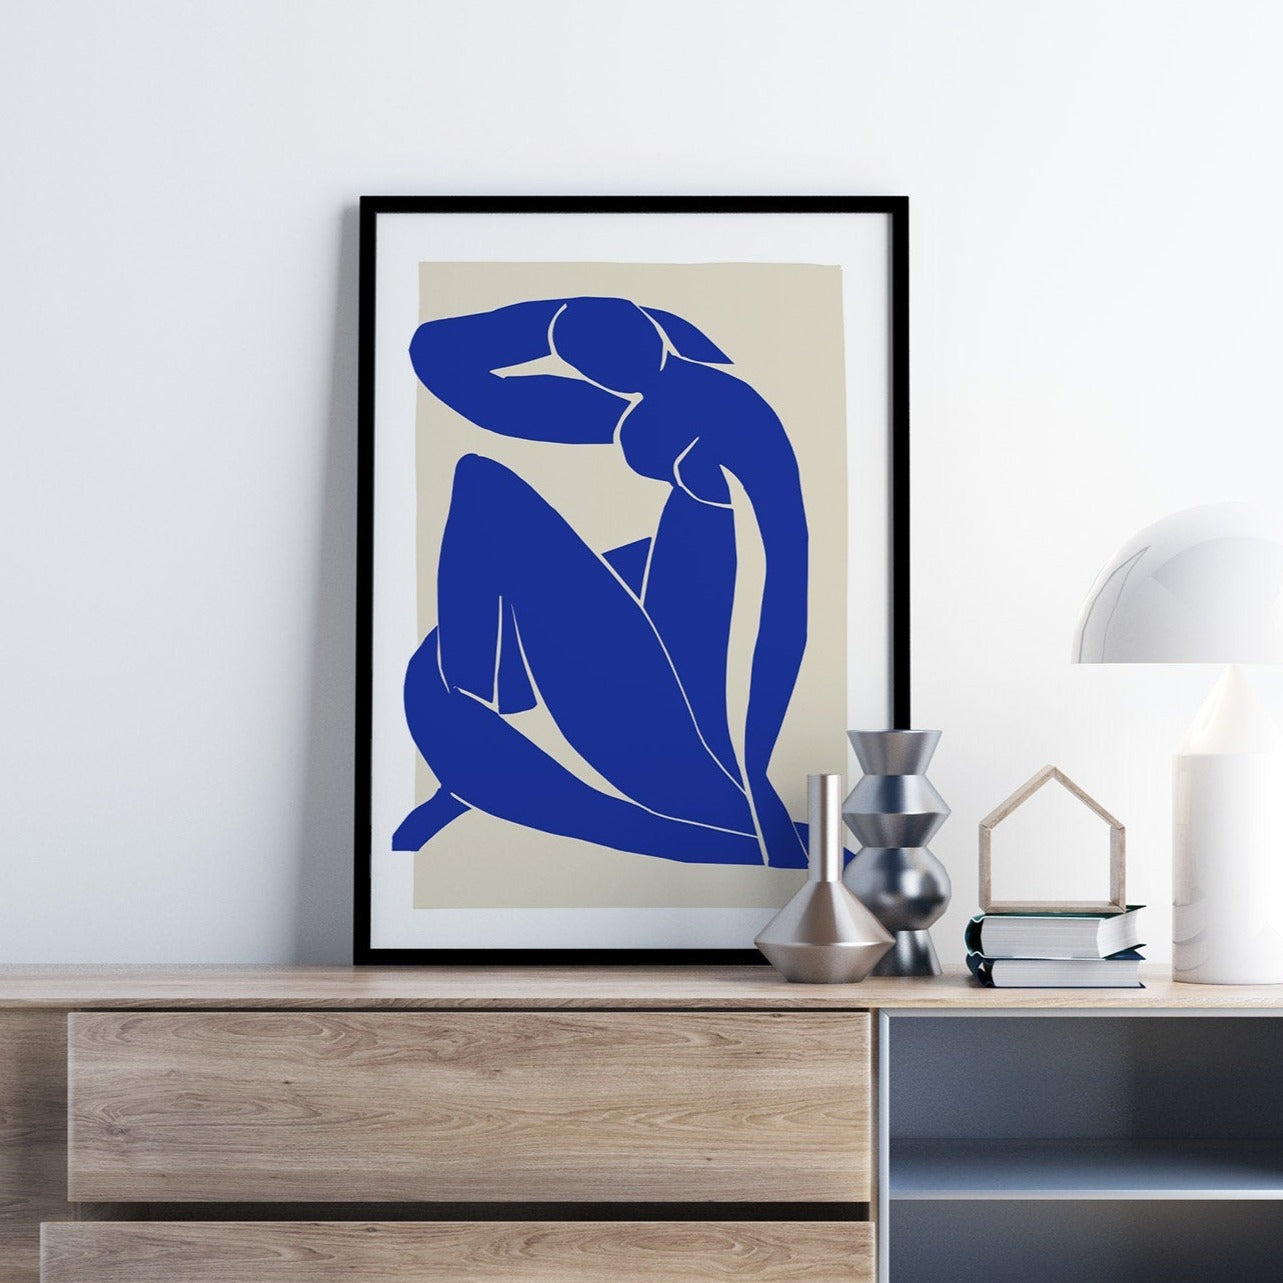 Set of 3 Matisse Blue Nude Prints